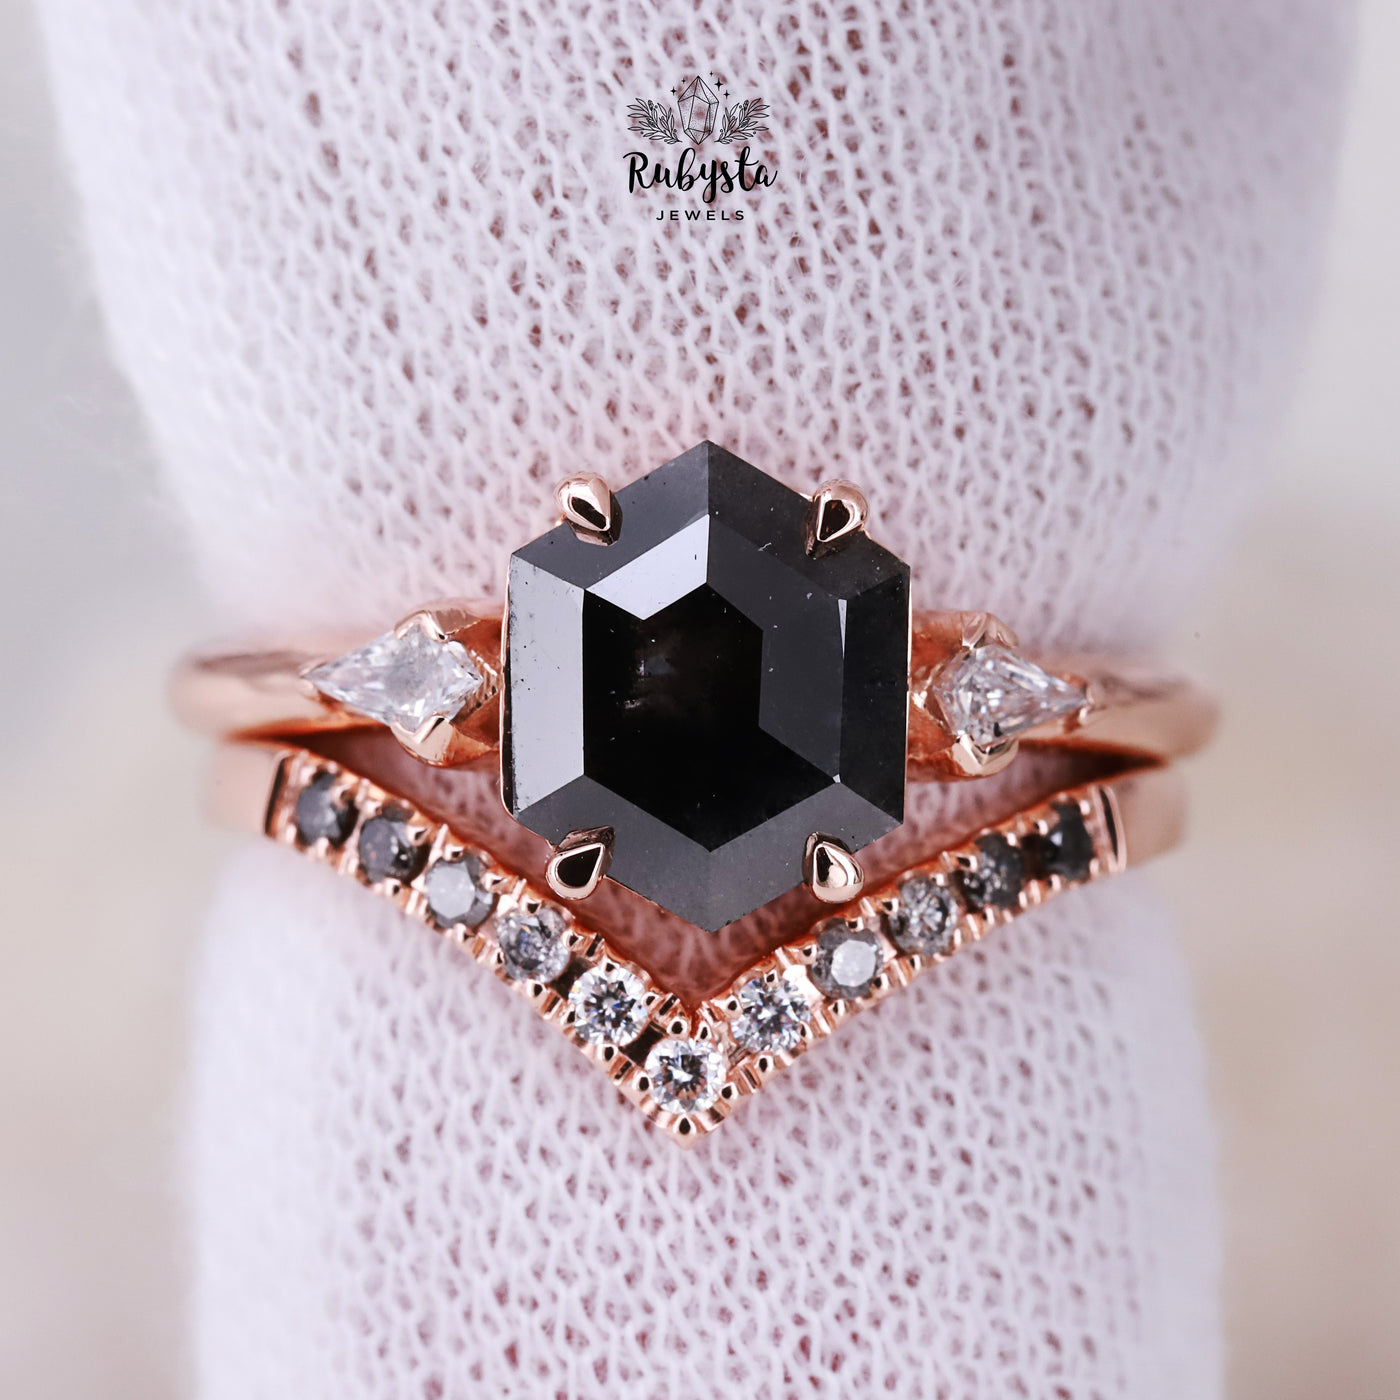 Salt and Pepper Diamond Ring | Engagement Ring | Hexagon Diamond Ring | Proposal Ring | Art Deco Ring | R-11013